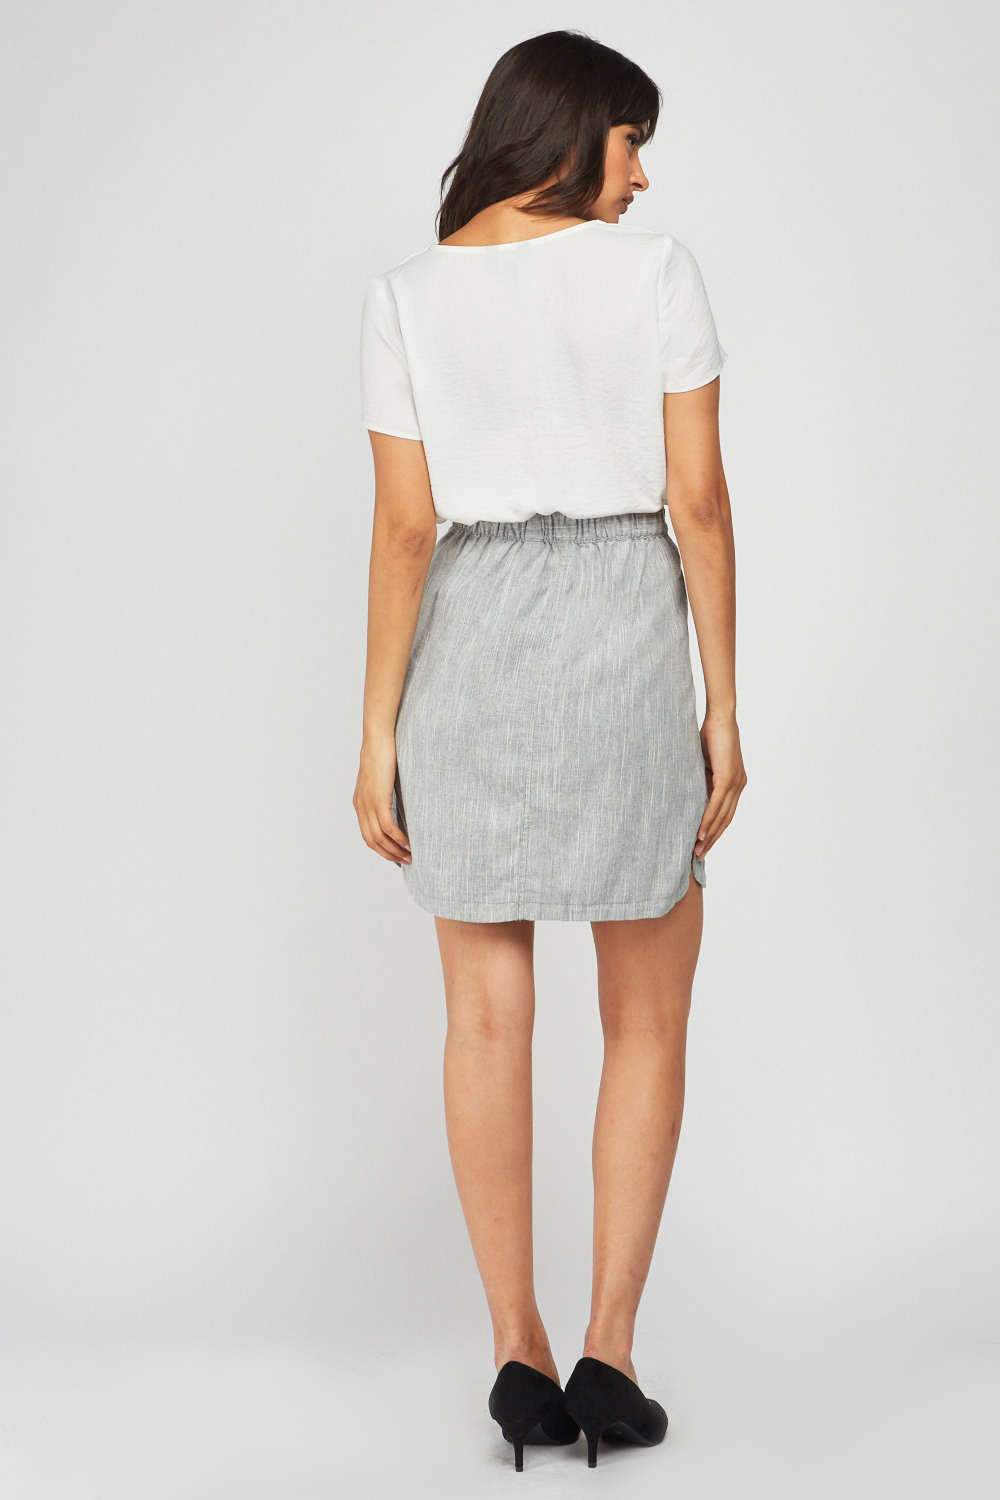 Flap Pockets Front Mini Skirt - Just $7